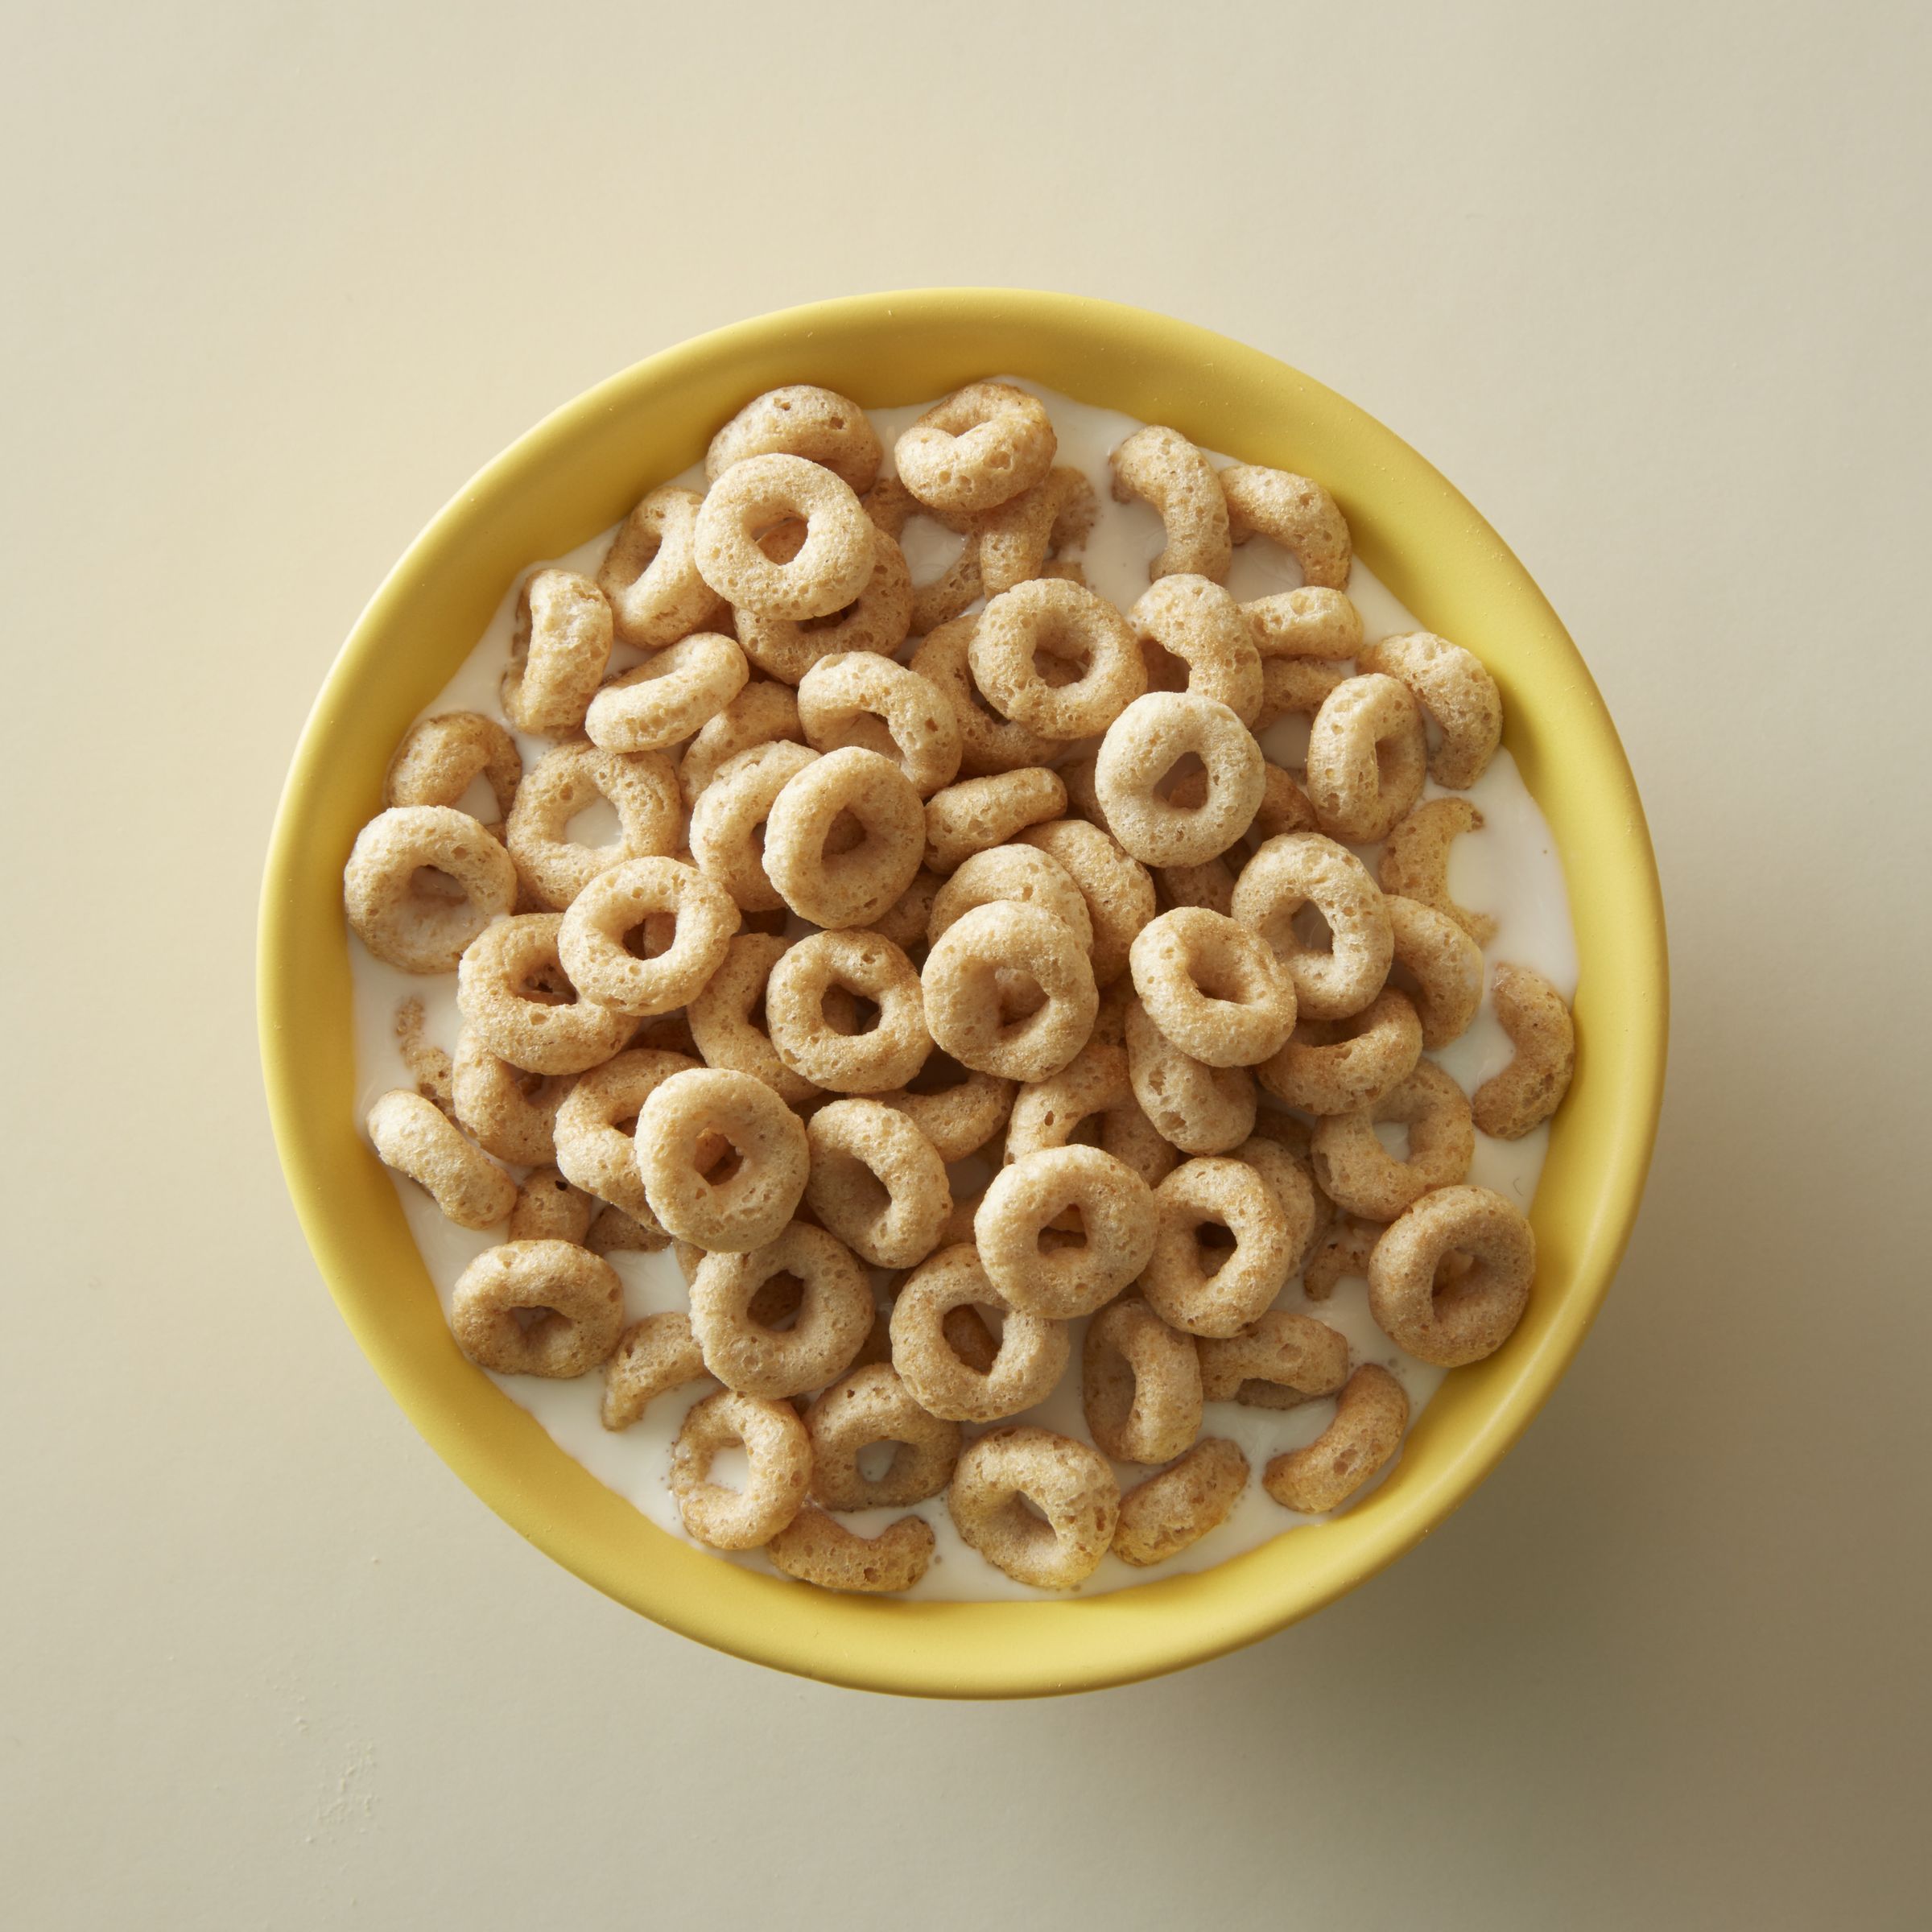 Honey Nut Cheerios™ Gluten Free Cereal Box (12 ct) 10.8 oz